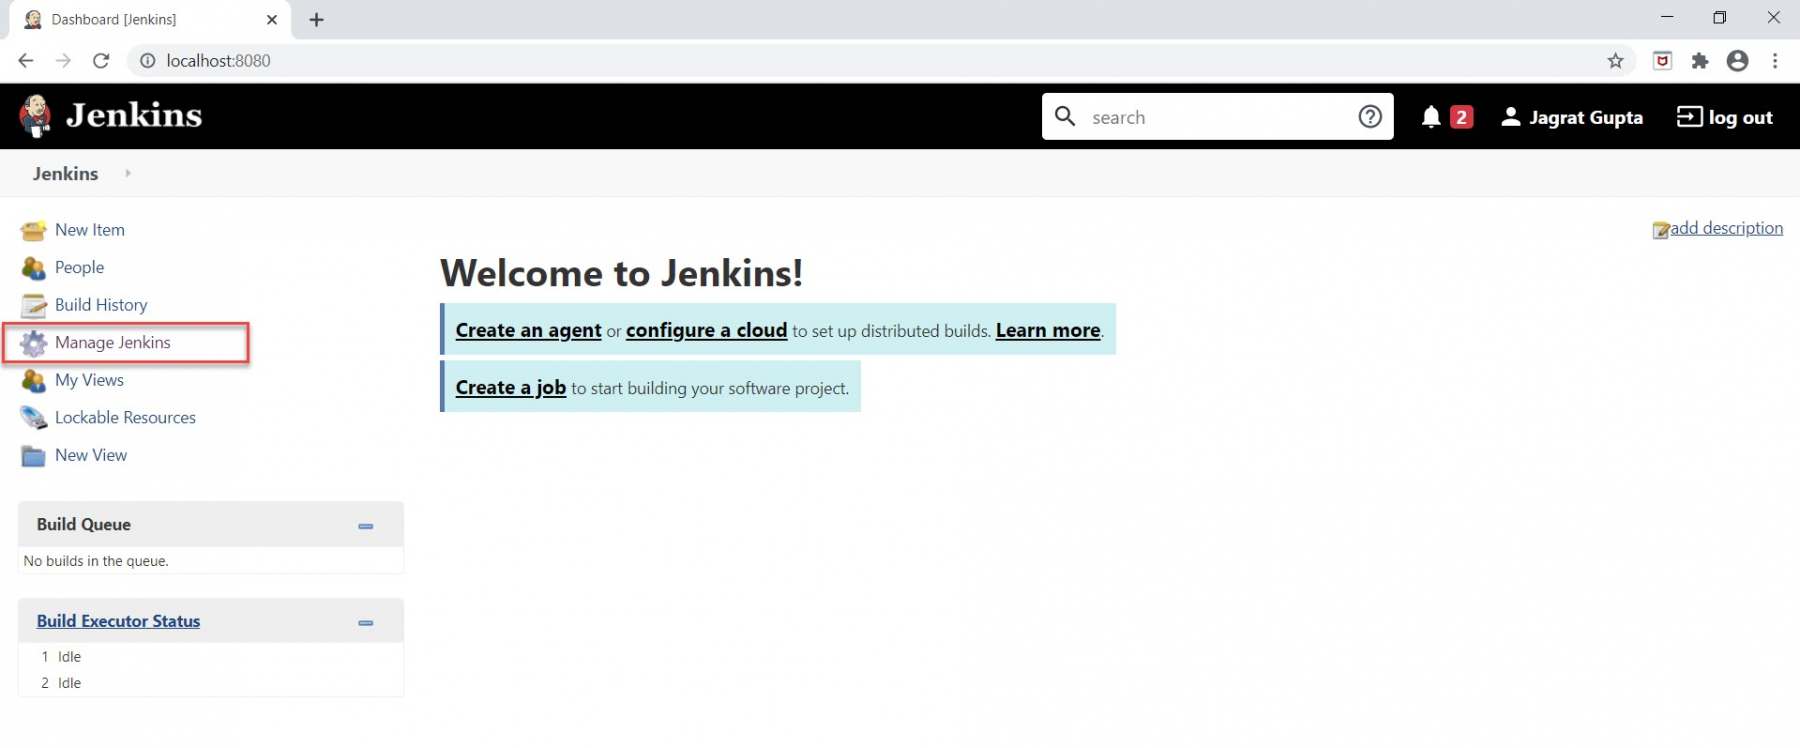 Jenkins Dashboard - Manage Jenkins